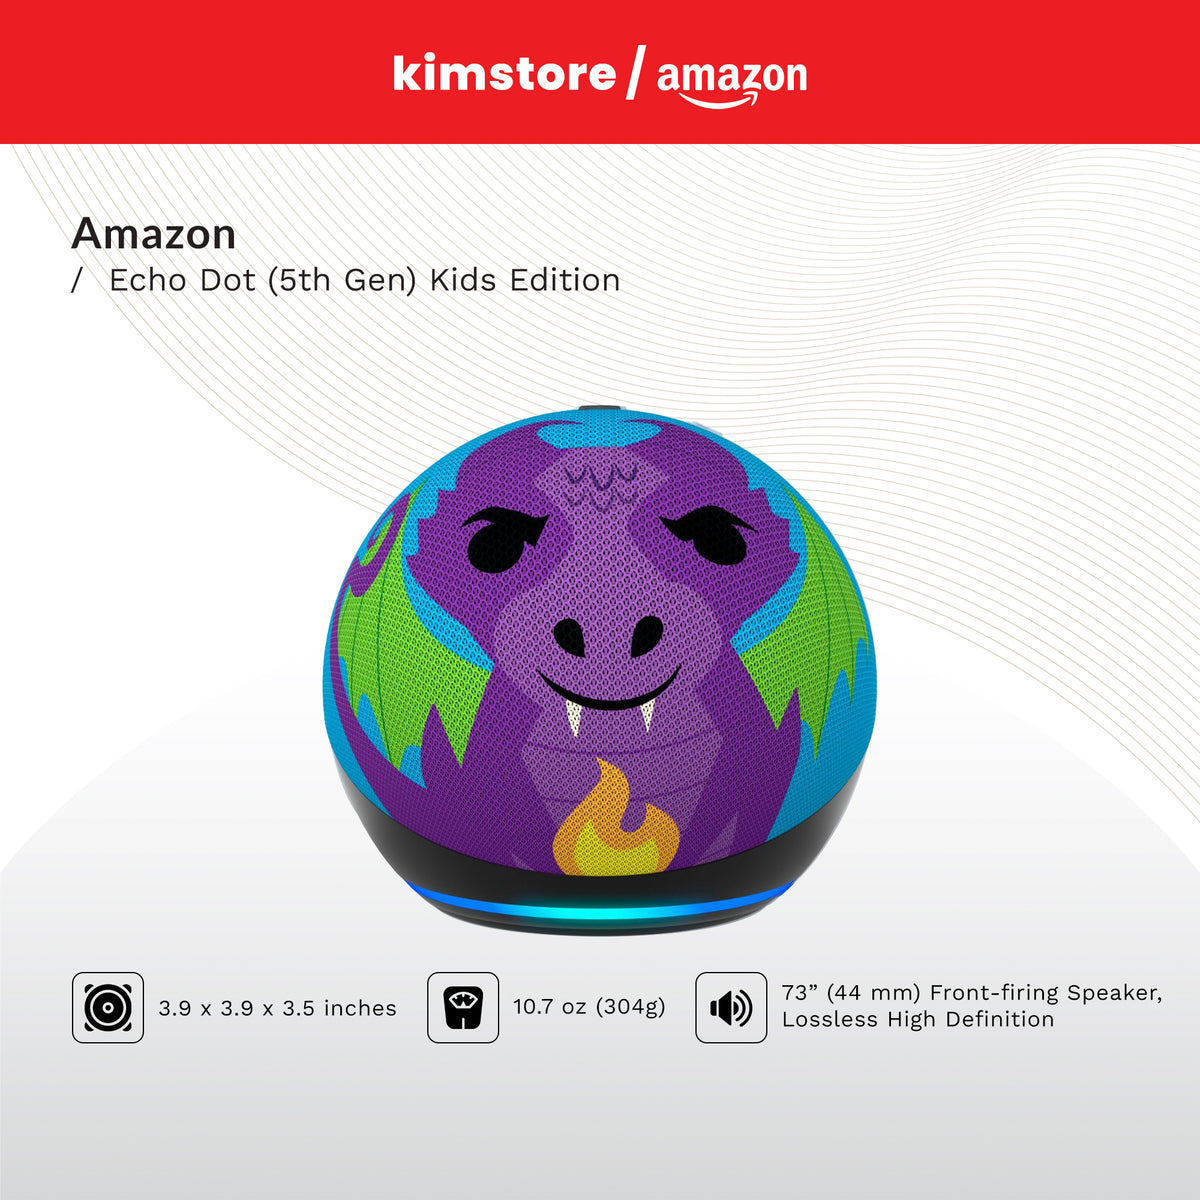 Amazon Echo Dot (5th Gen) Kids Edition